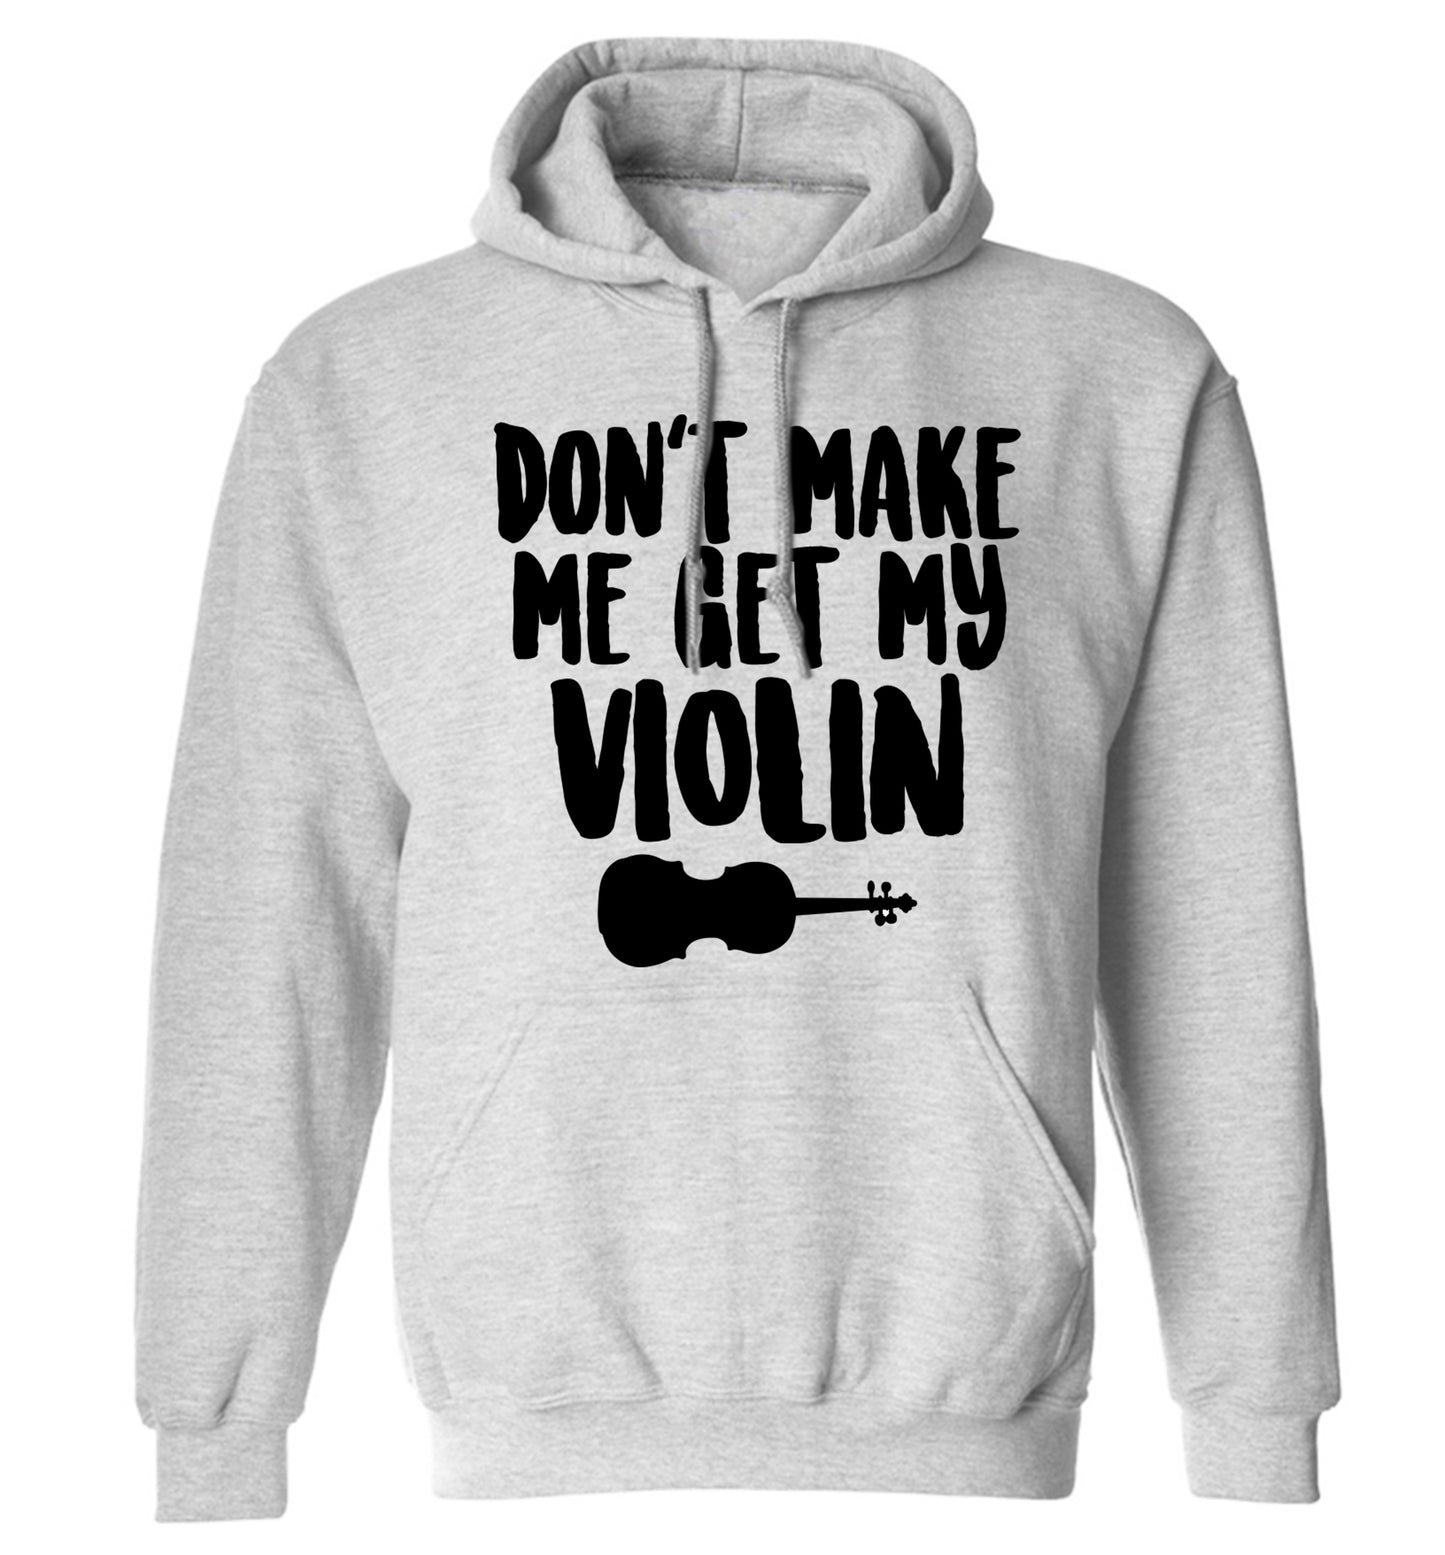 Don't make me get my violin adults unisex grey hoodie 2XL